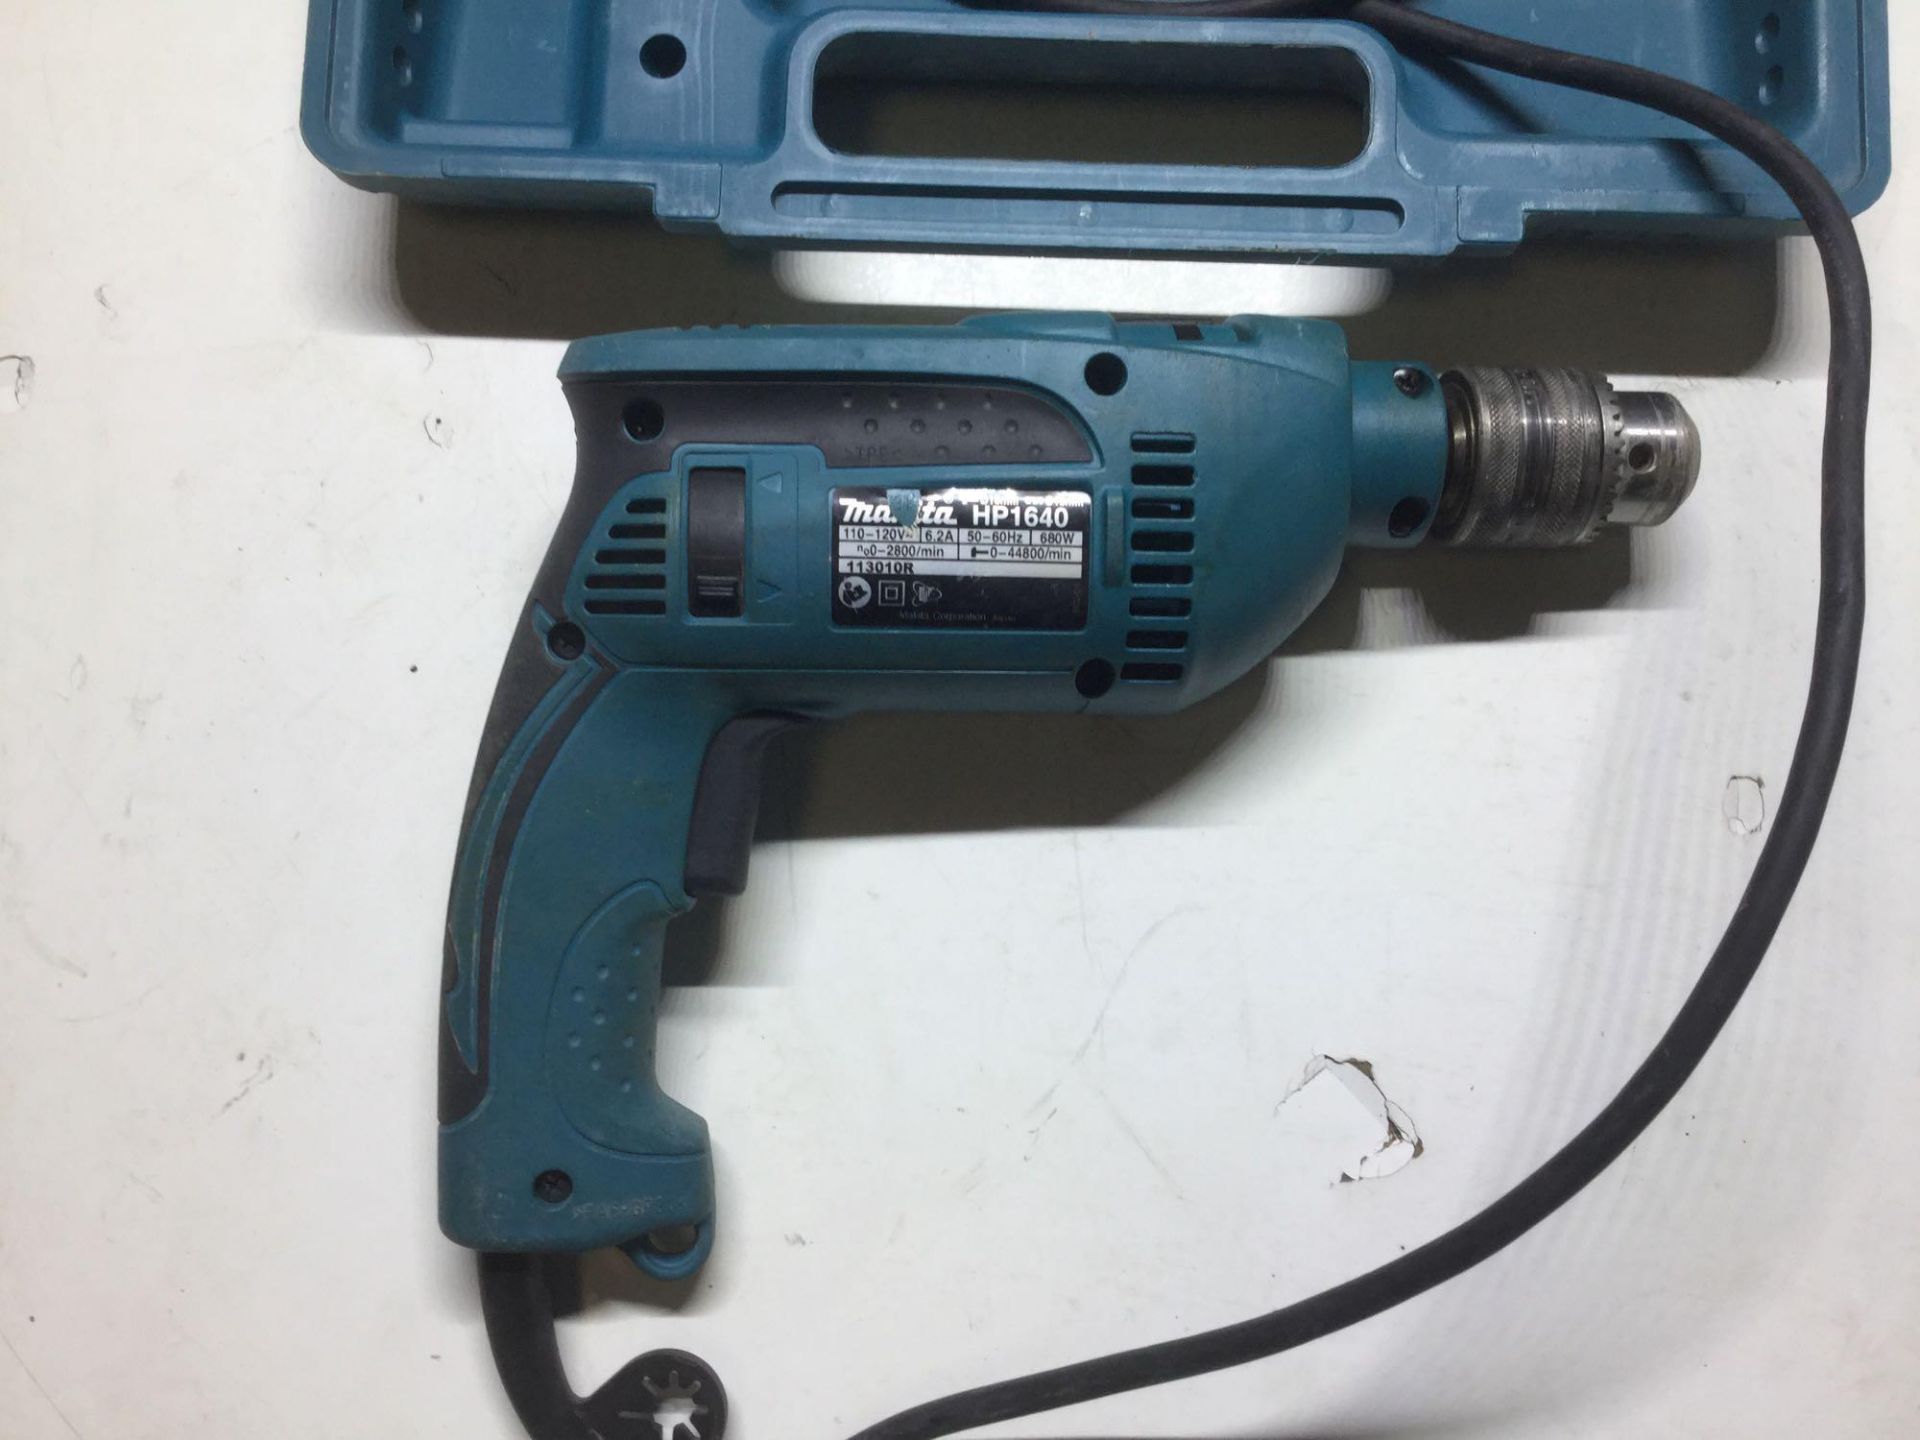 Makita 110 V drill model number HP1640 - Image 2 of 2